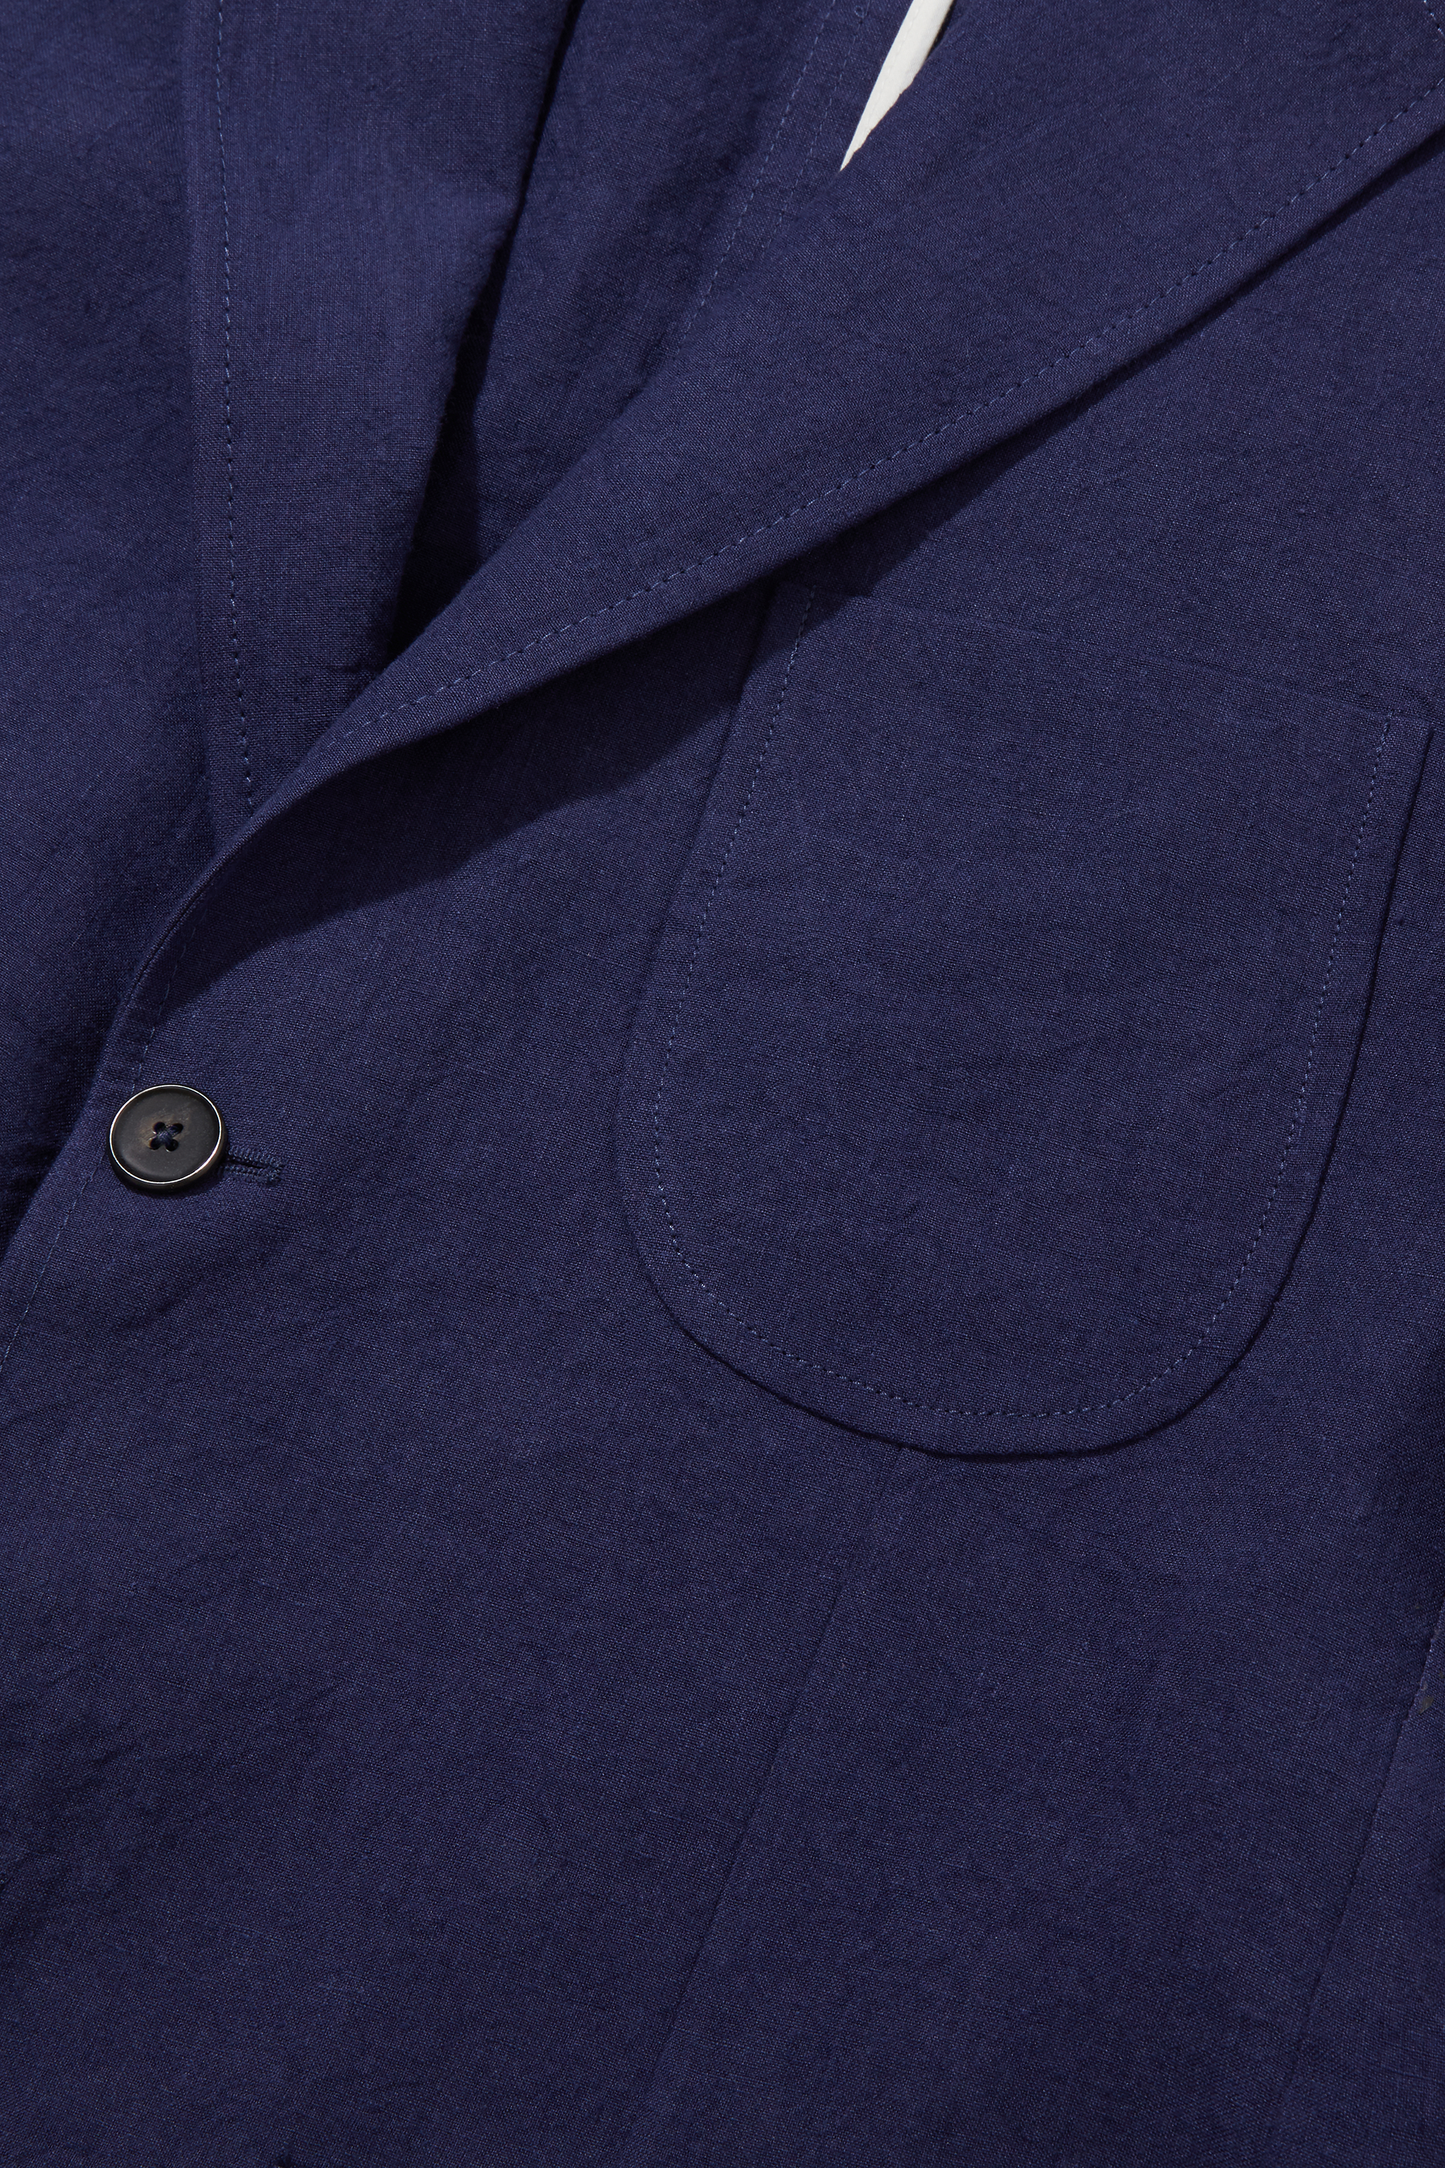 Laundered Linen Suit Jacket Indigo Navy